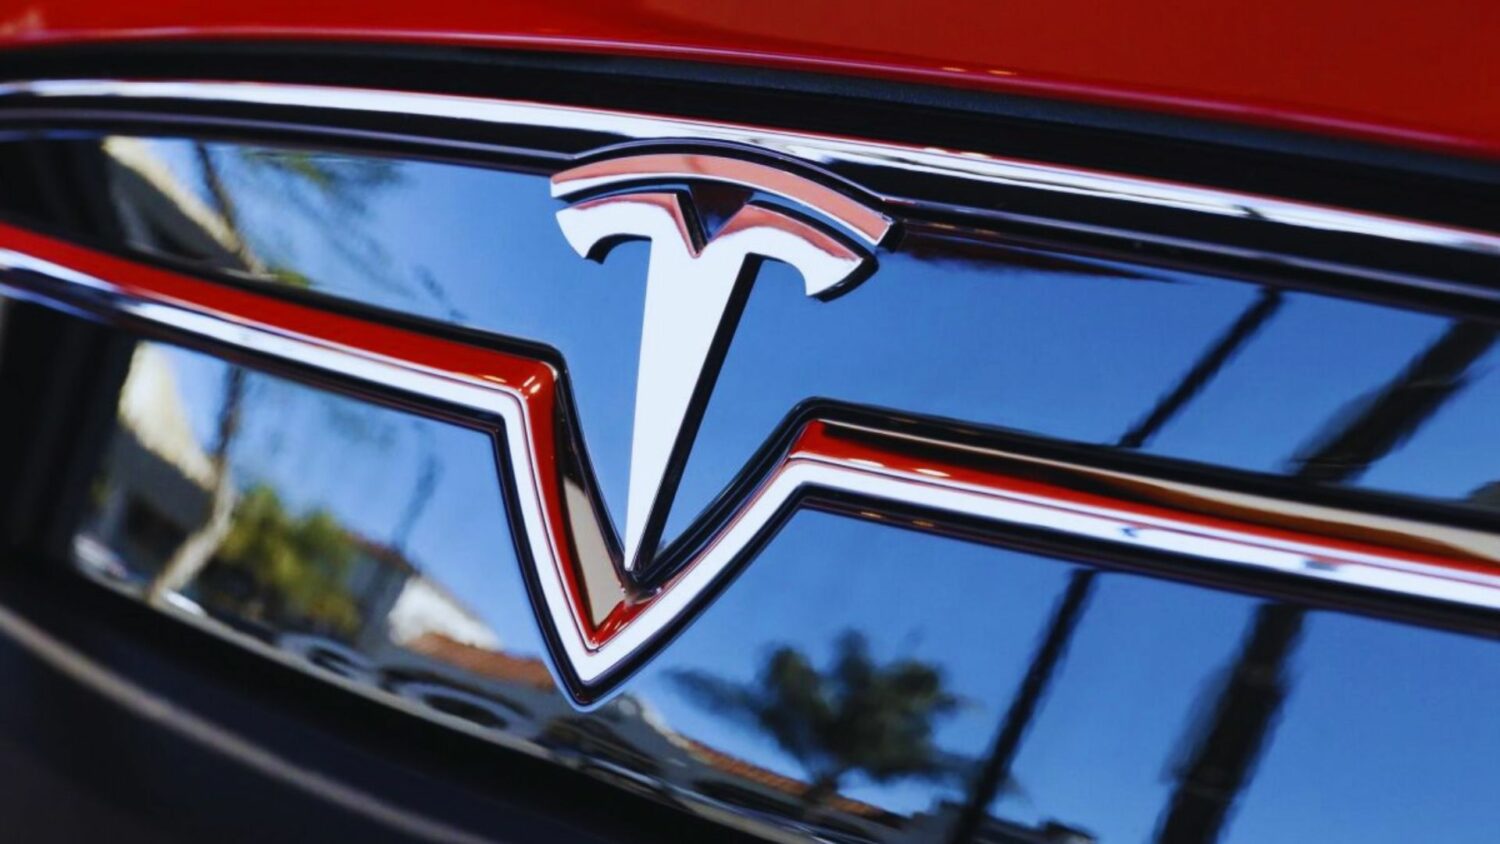 Tesla's hidden feature 'Elon Mode' discovered by hacker: report